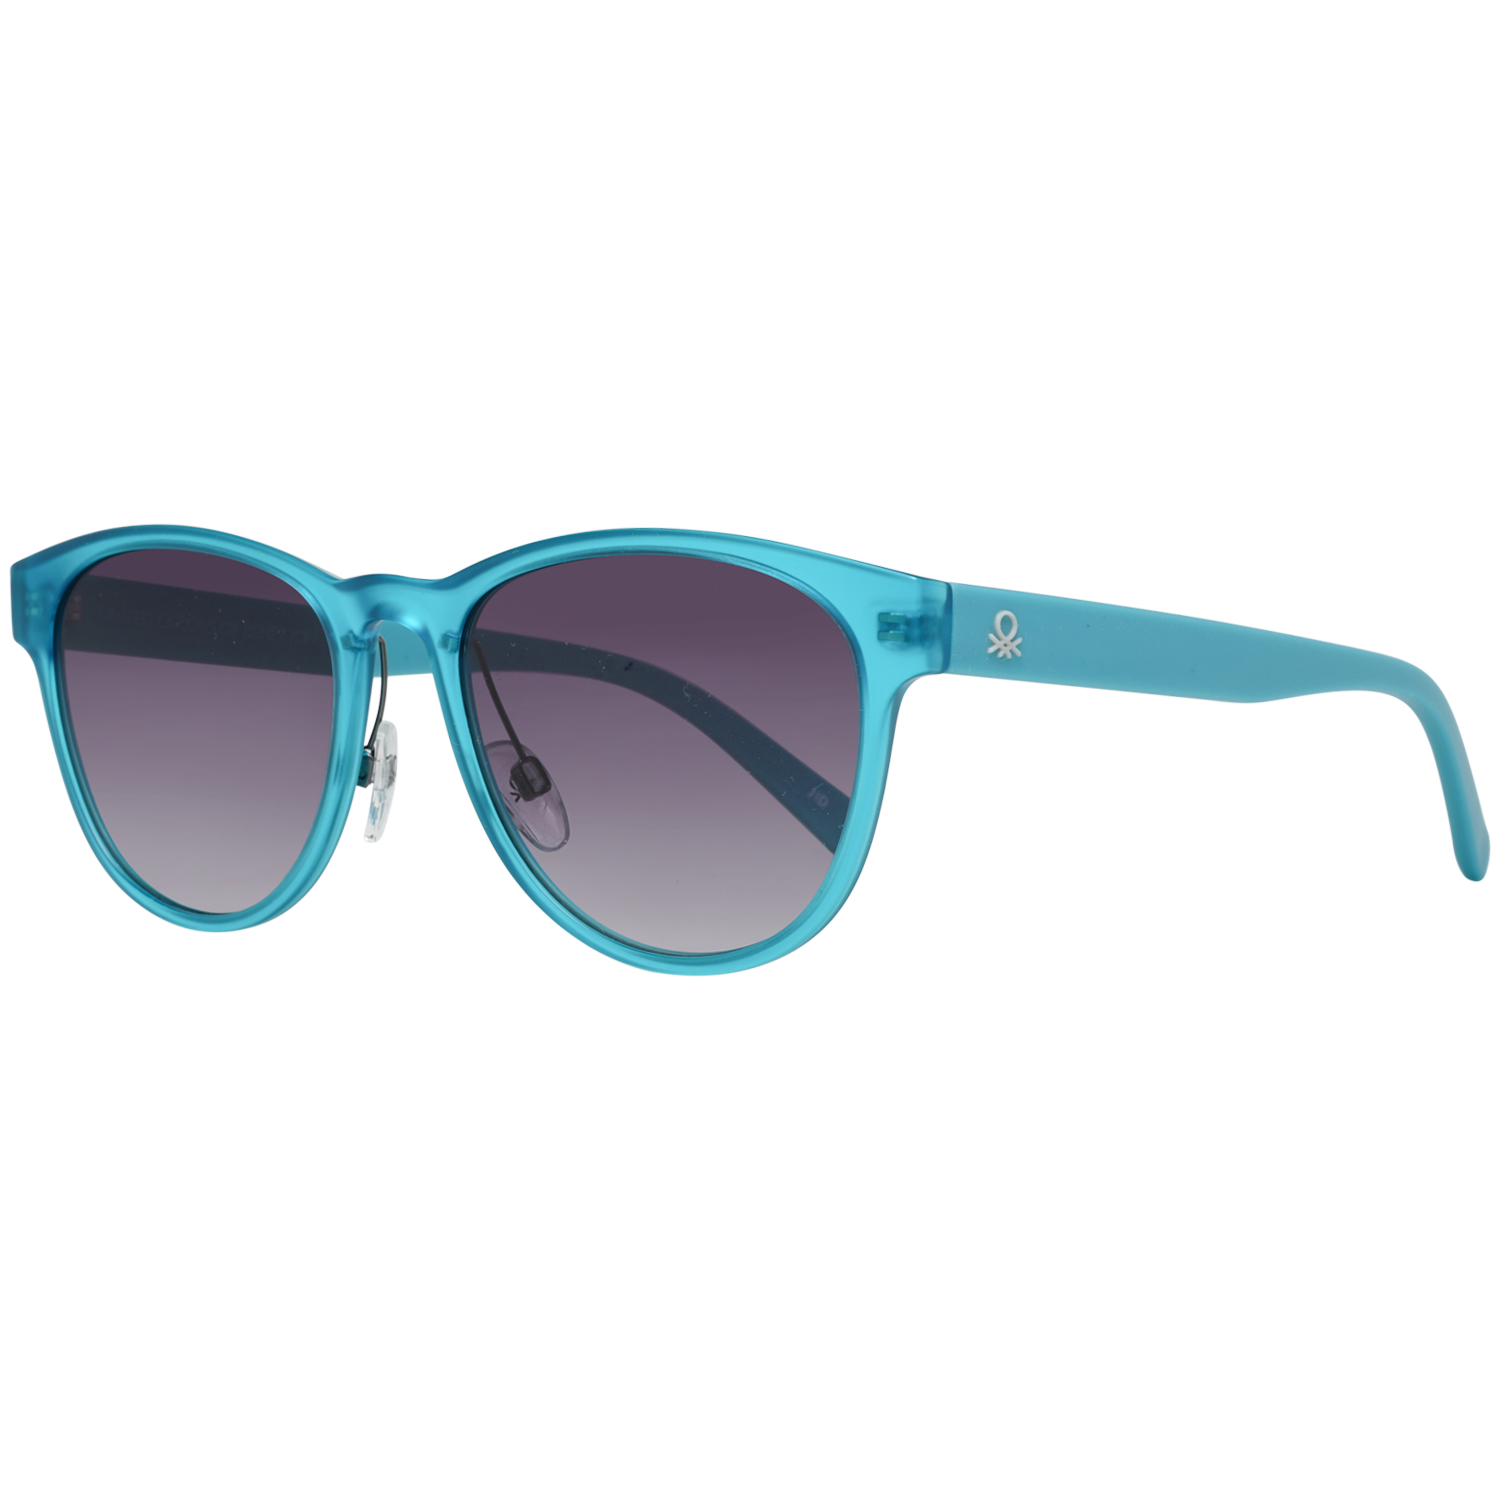 Benetton Sunglasses BE5010 606 57 Blue